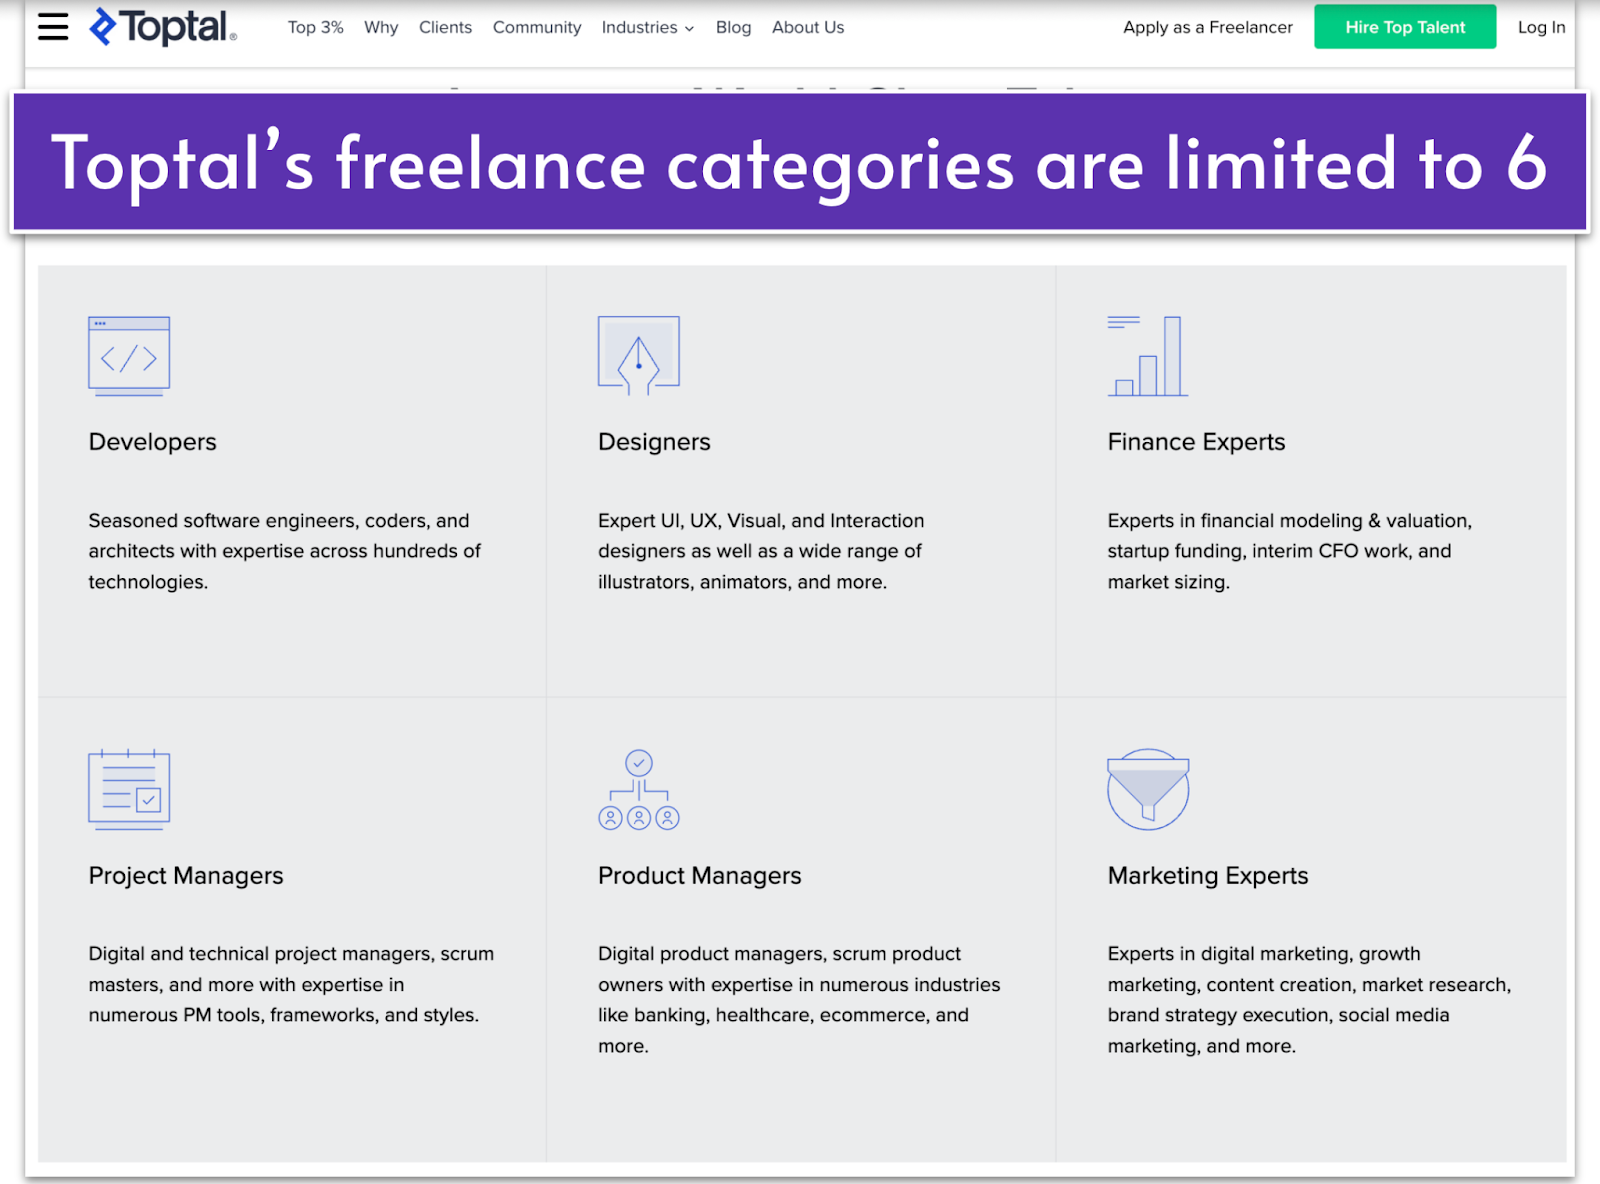 Toptal's freelance categories